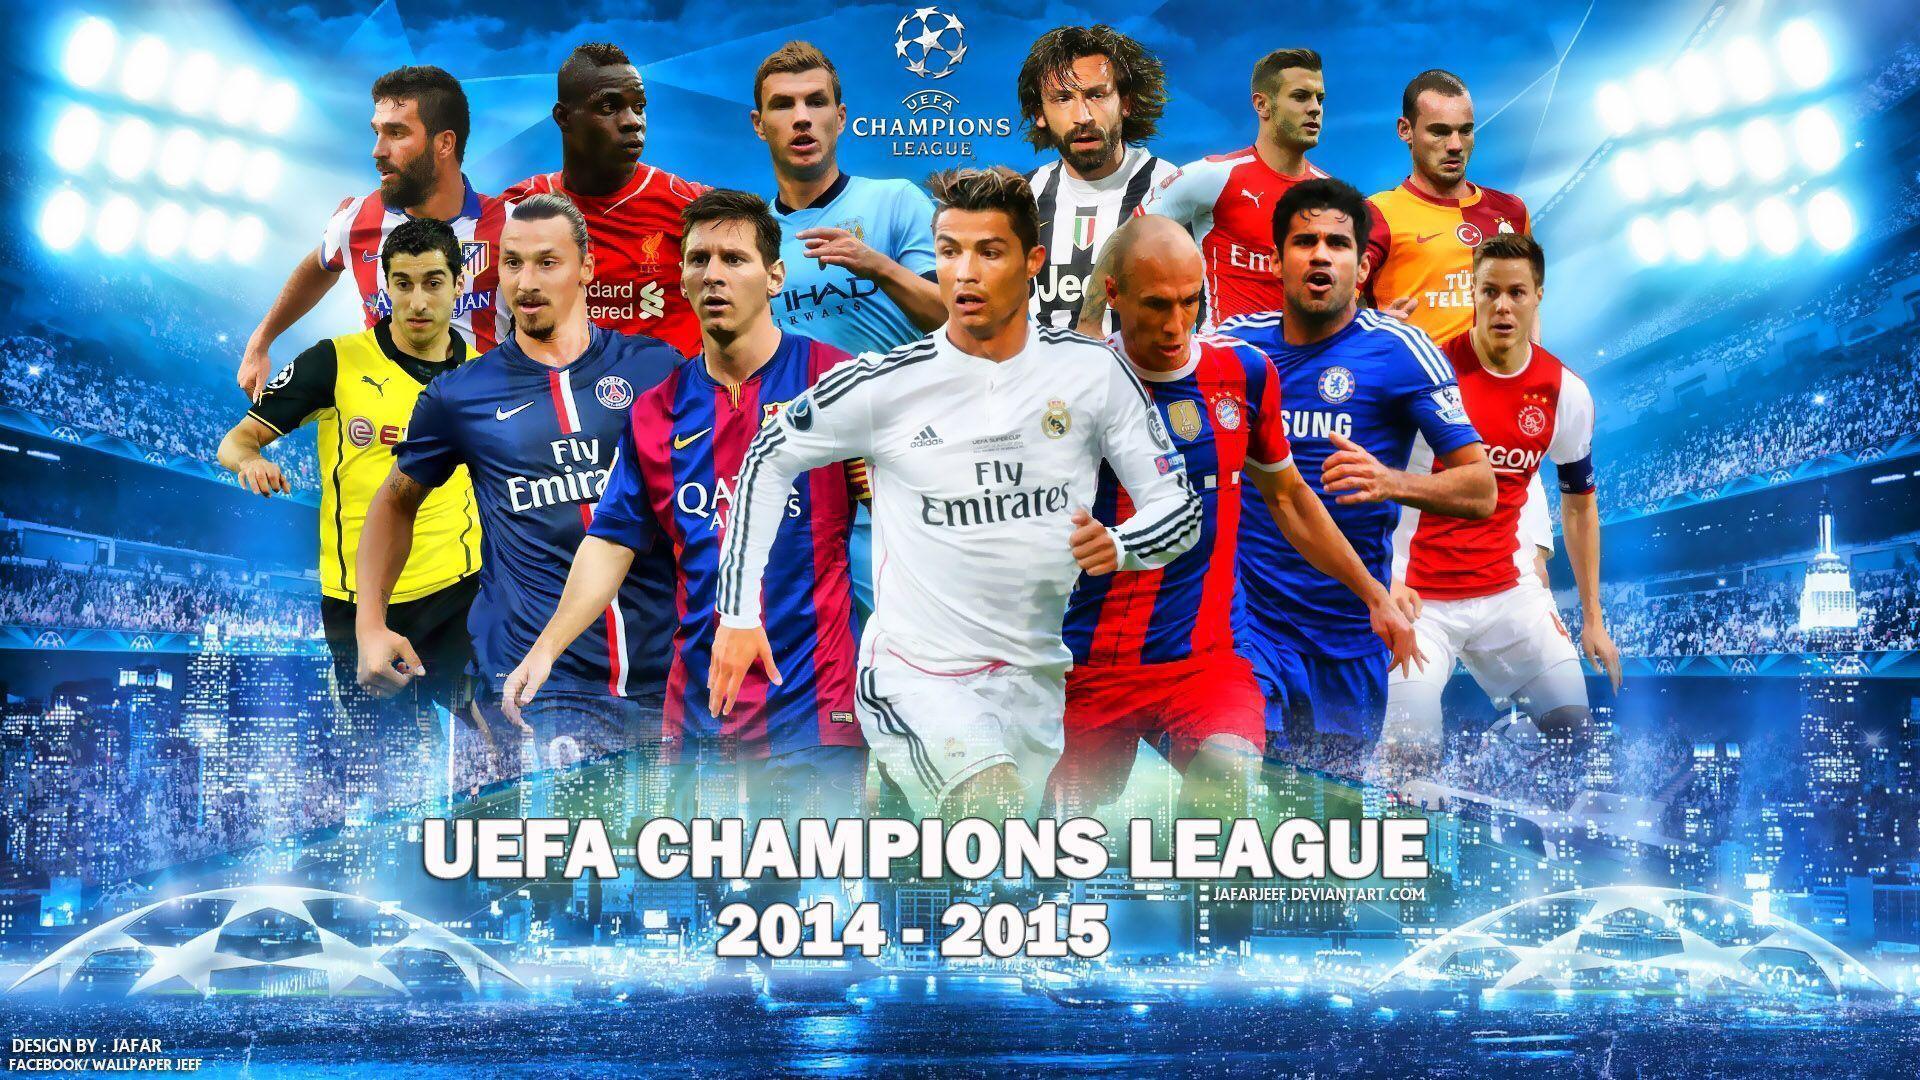 UEFA Champions League 2014 2015 Football Stars Wallpaper Wide Or